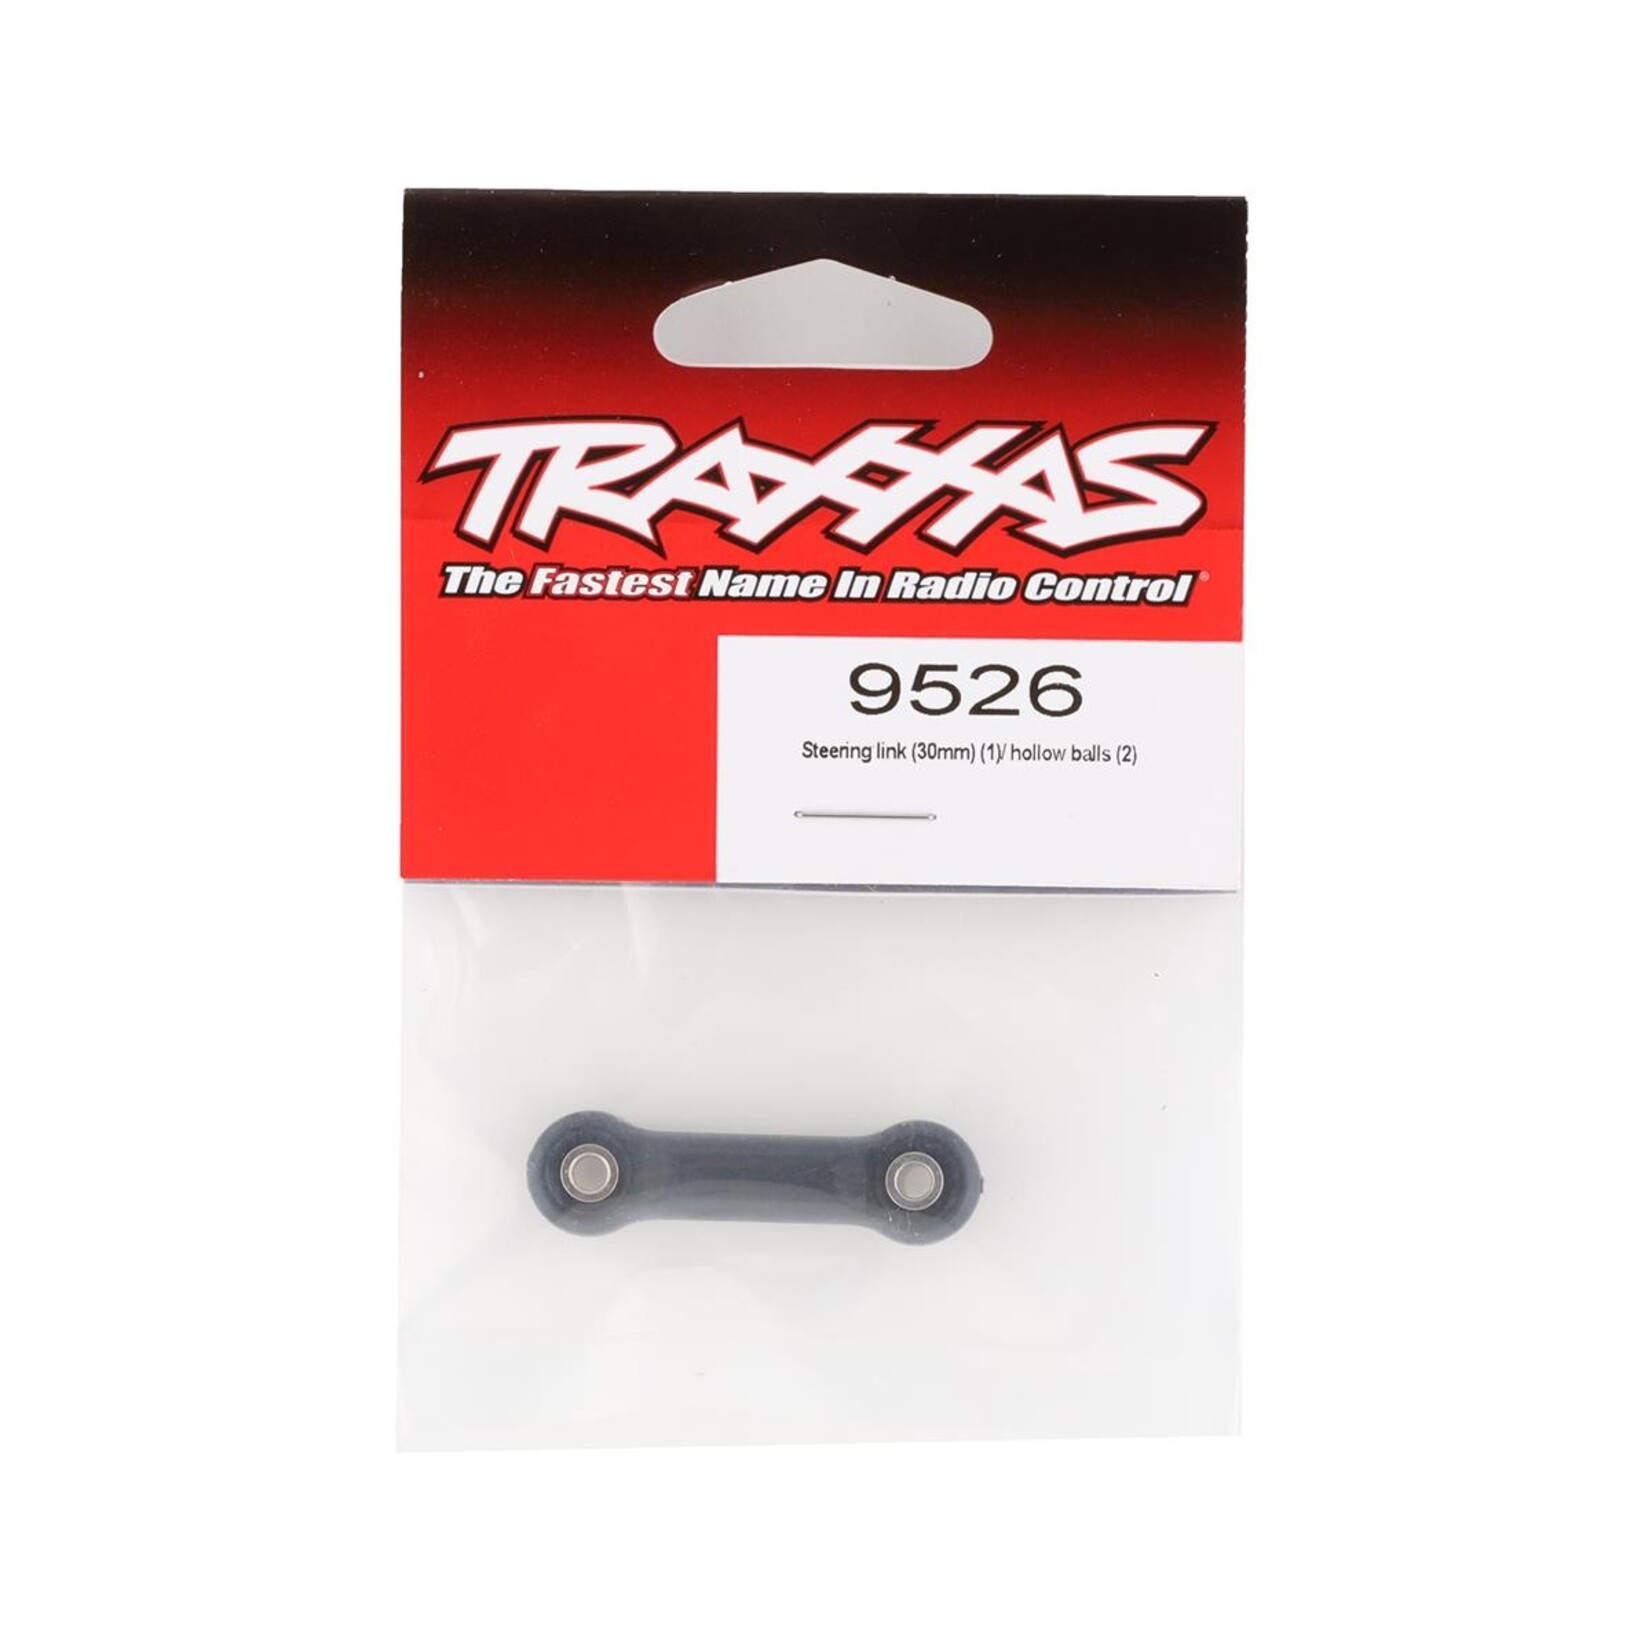 Traxxas Traxxas, Sledge, Steering link (30mm) (1)/ hollow balls (2) #9526